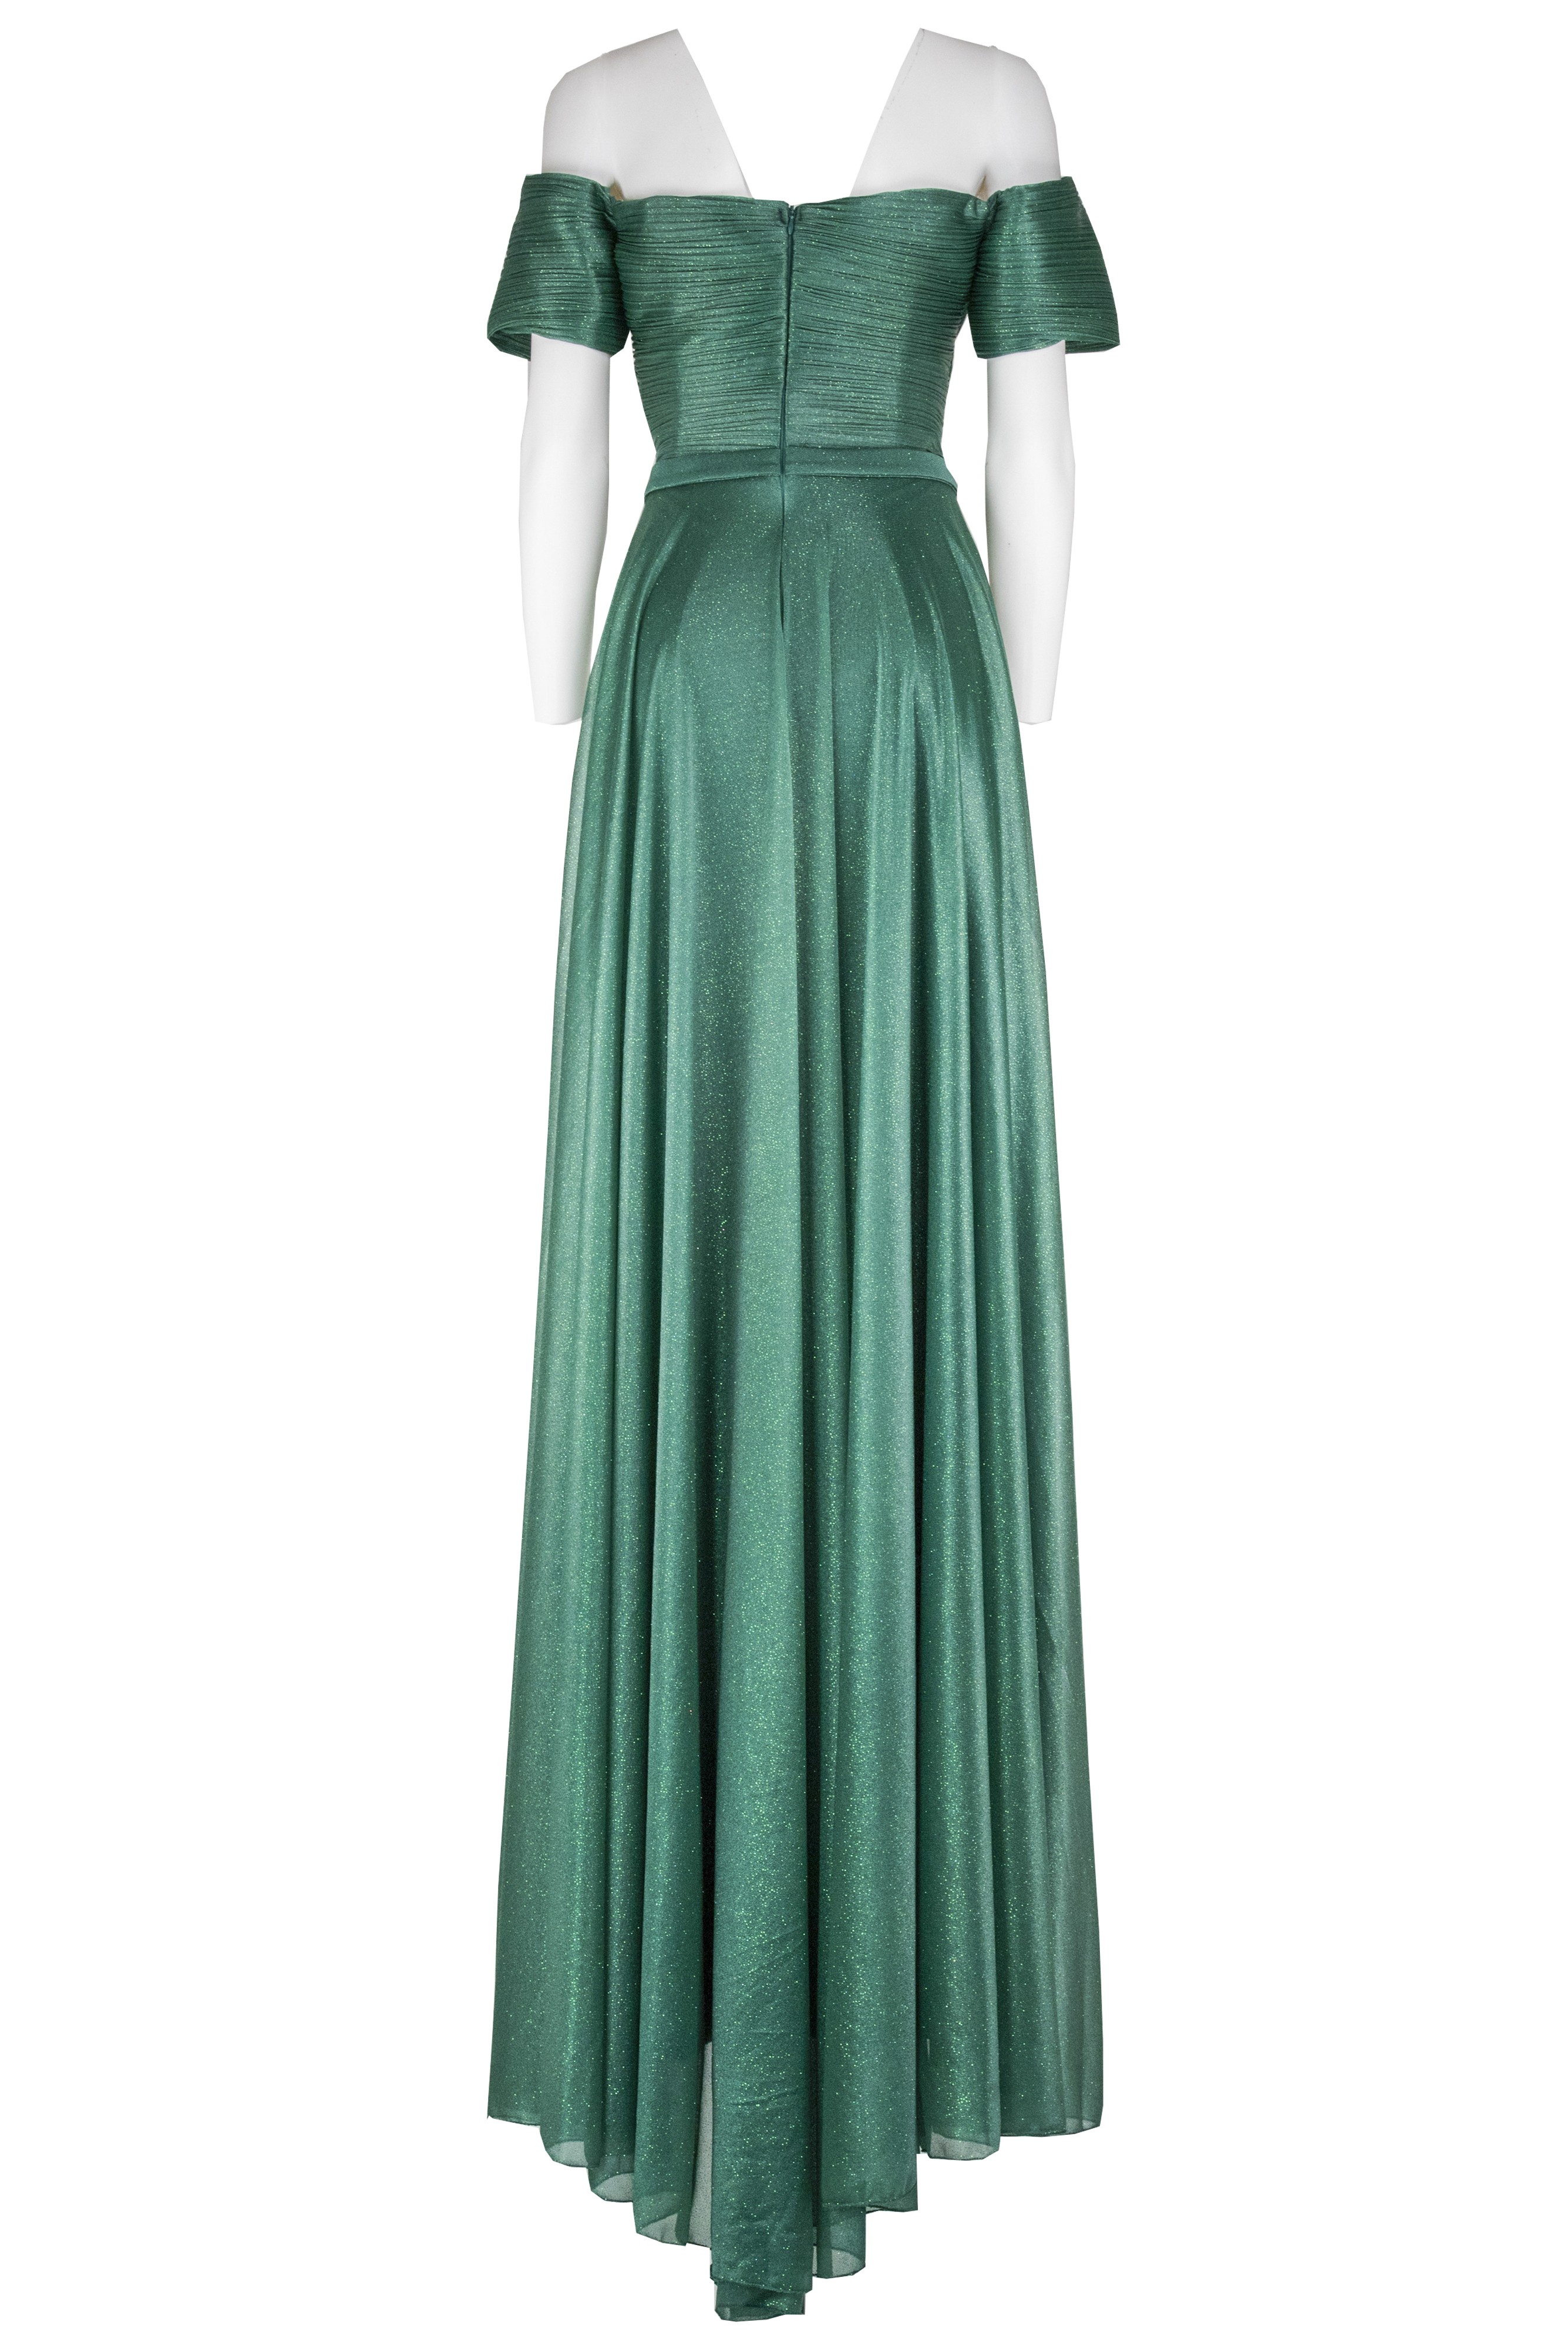 Musani Dress EE710008 76 Smeraldo - New Season Spring Summer 2020